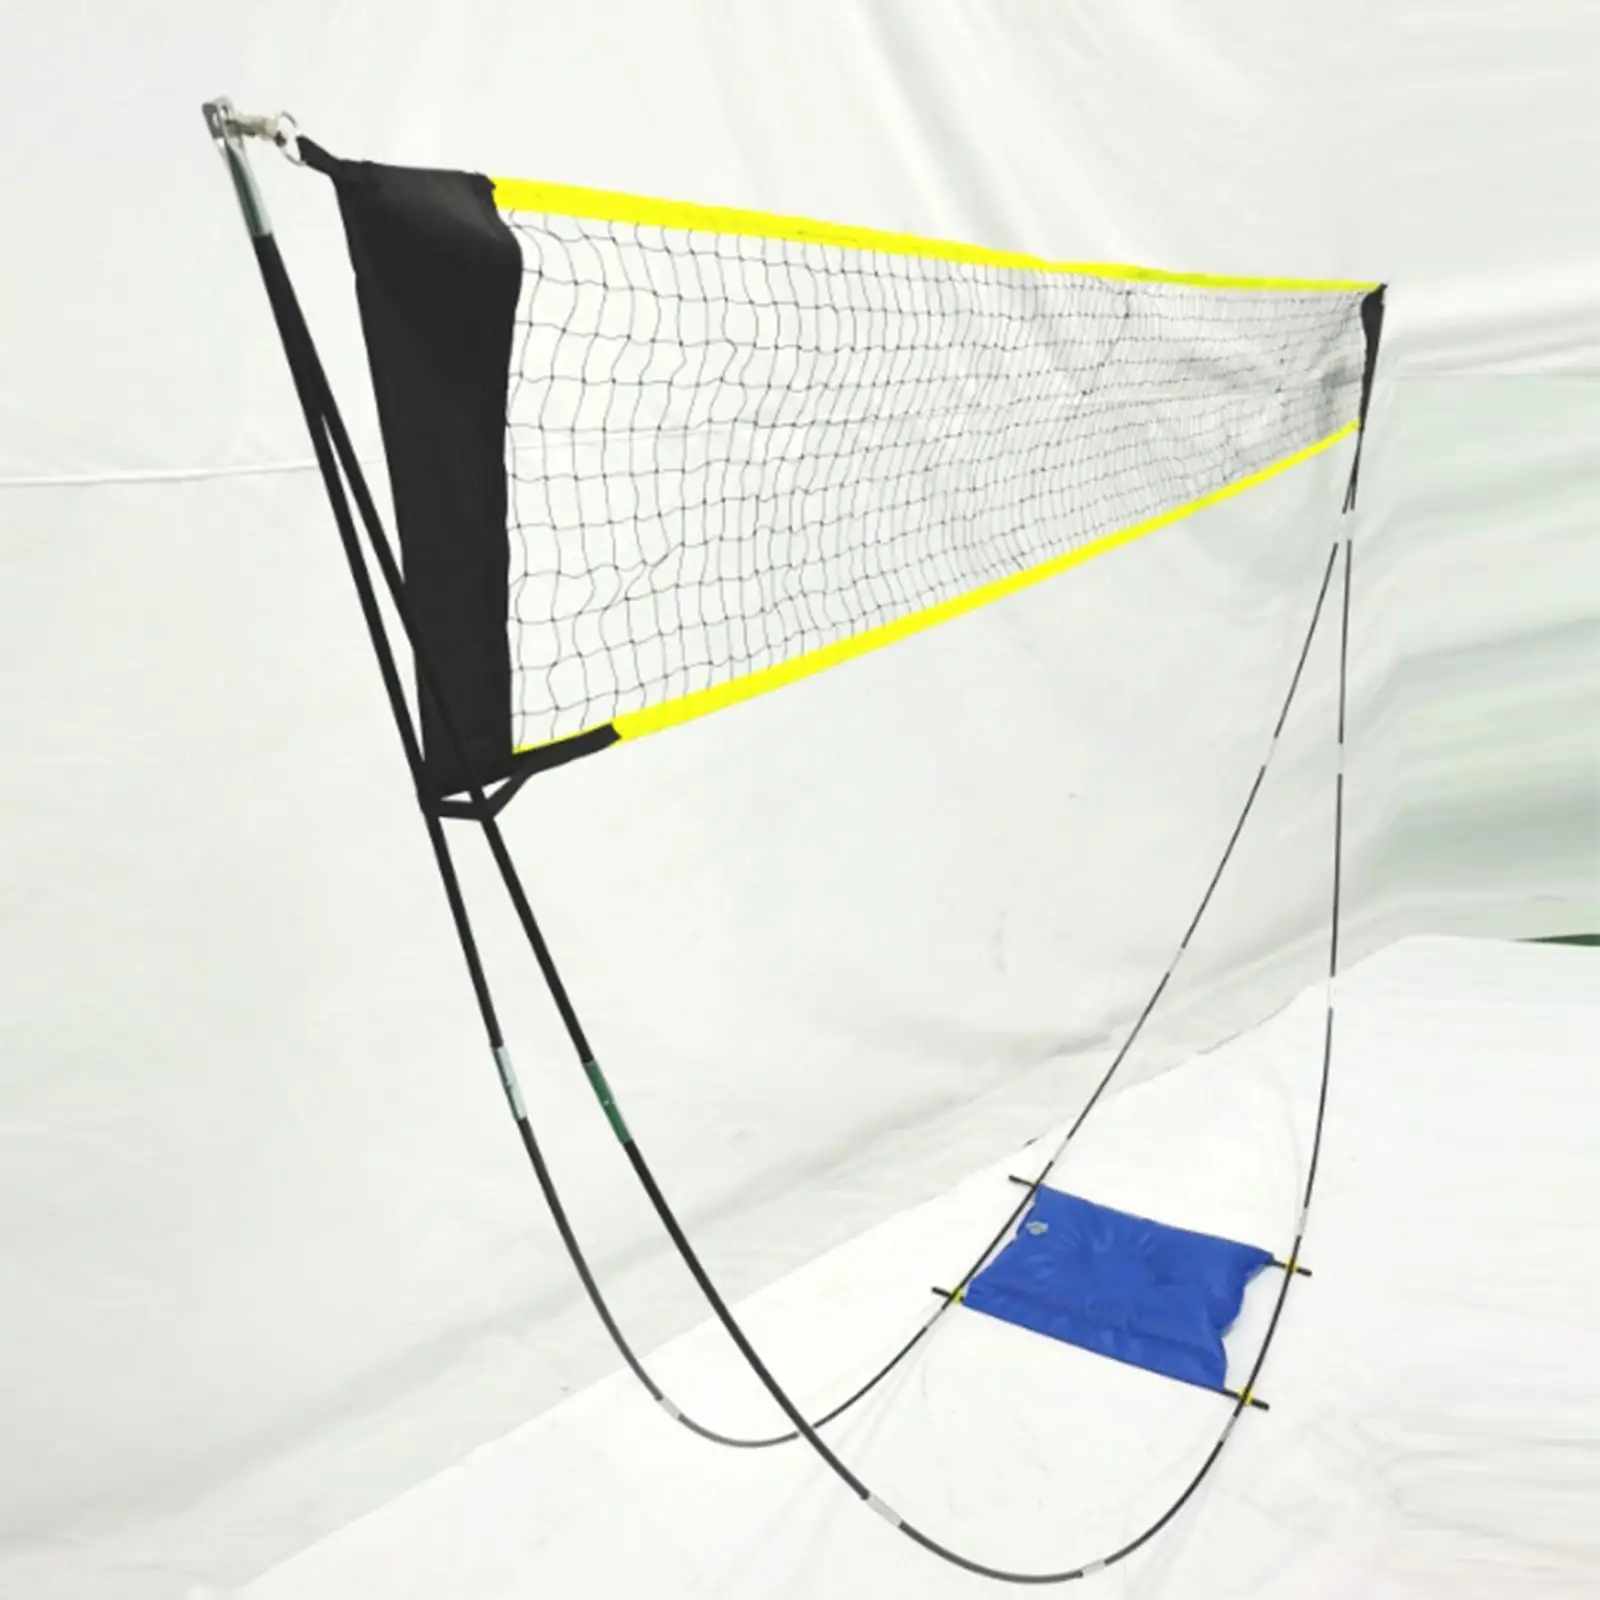 Badminton Net Set with Carry Bag Setup Sports Net Volleyball Net Backyard for Yard Indoor Outdoor Lawn Match Beach Games